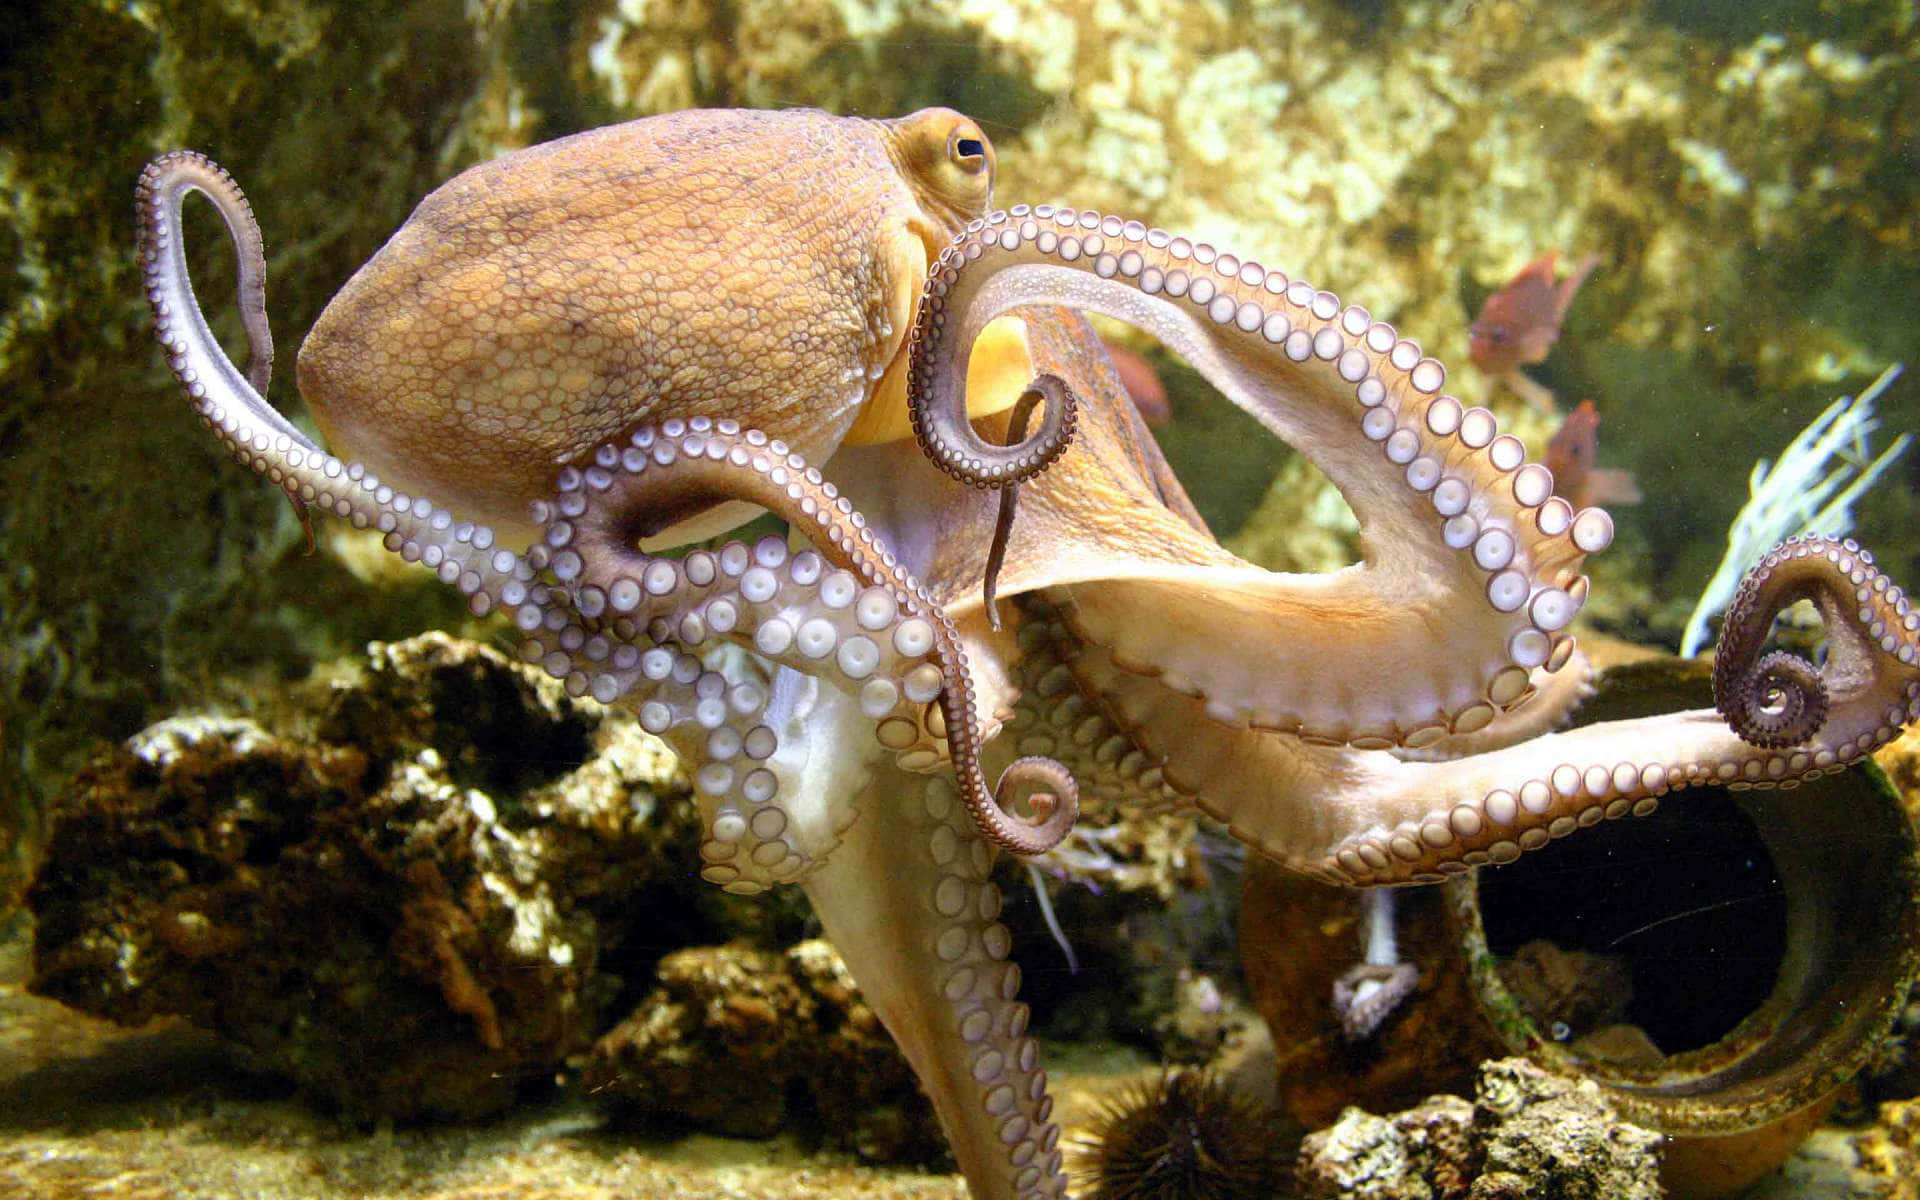 An octopus exploring the depths of the ocean